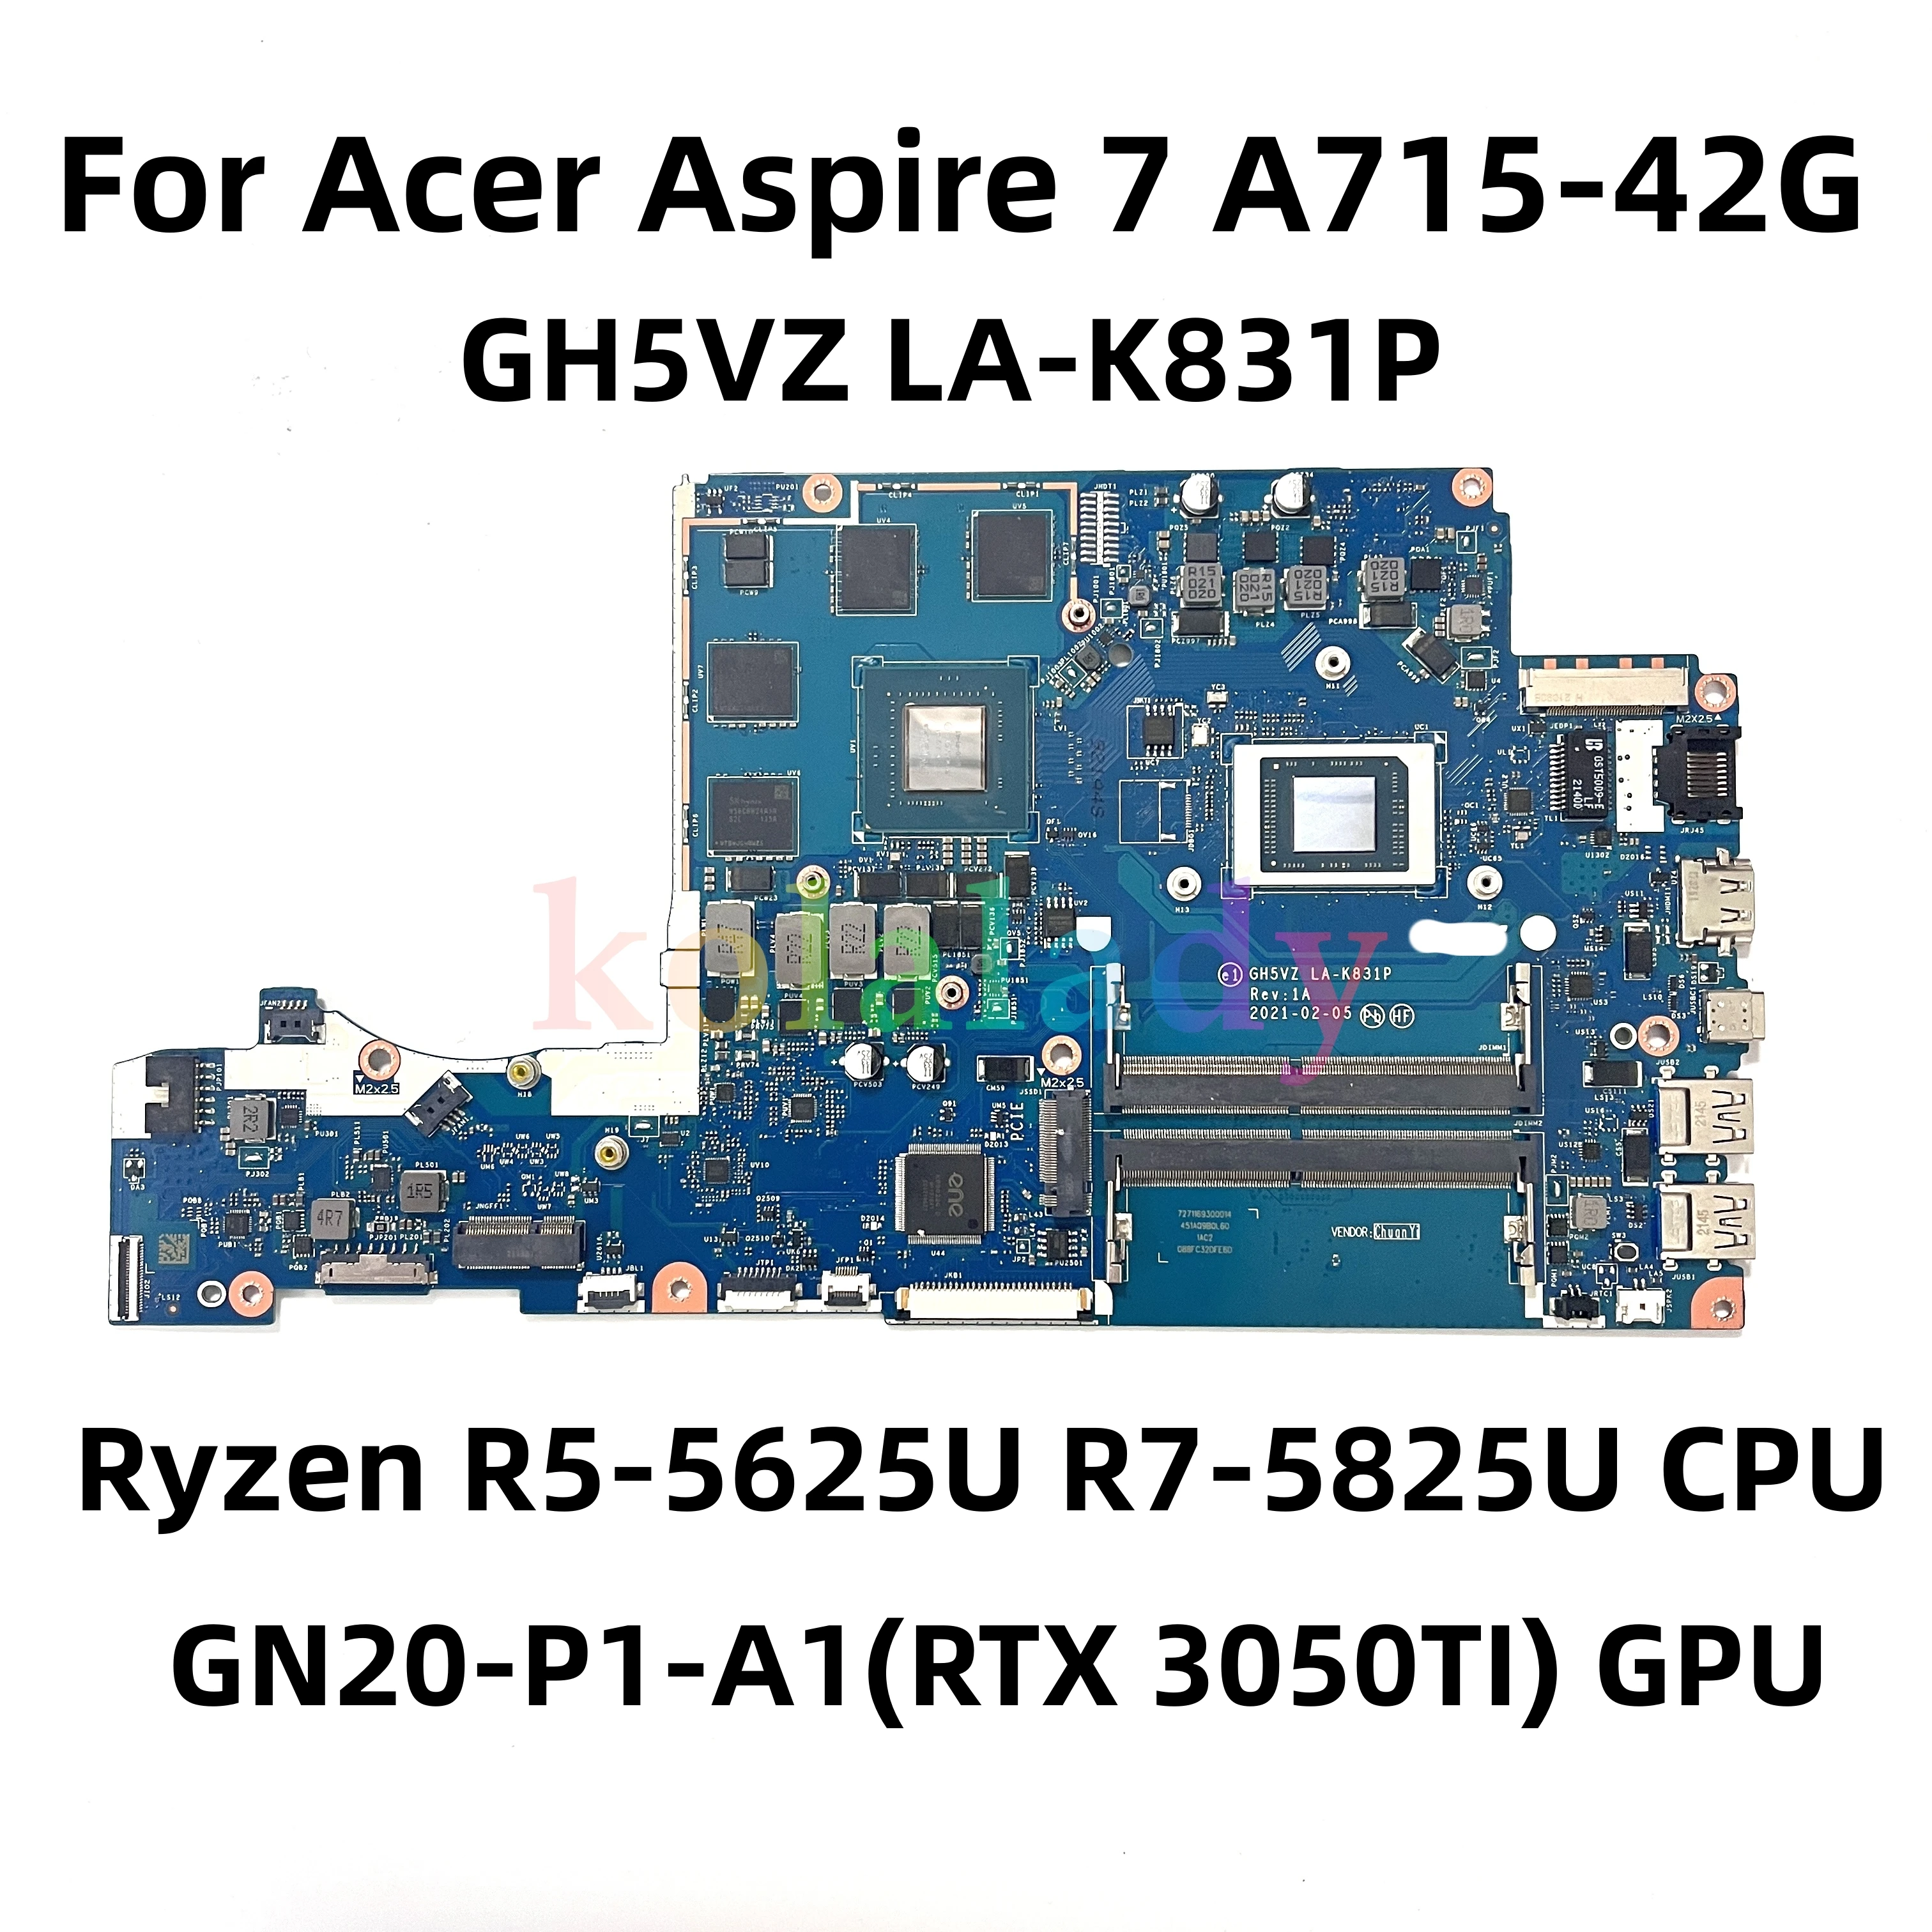 

GH5VZ LA-K831P Mainboard For Acer Aspire 7 A715-42G Laptop Motherboard NB.QAY11.003 With R5-5625U/R7-5825U CPU RTX3050ti 4GB GPU